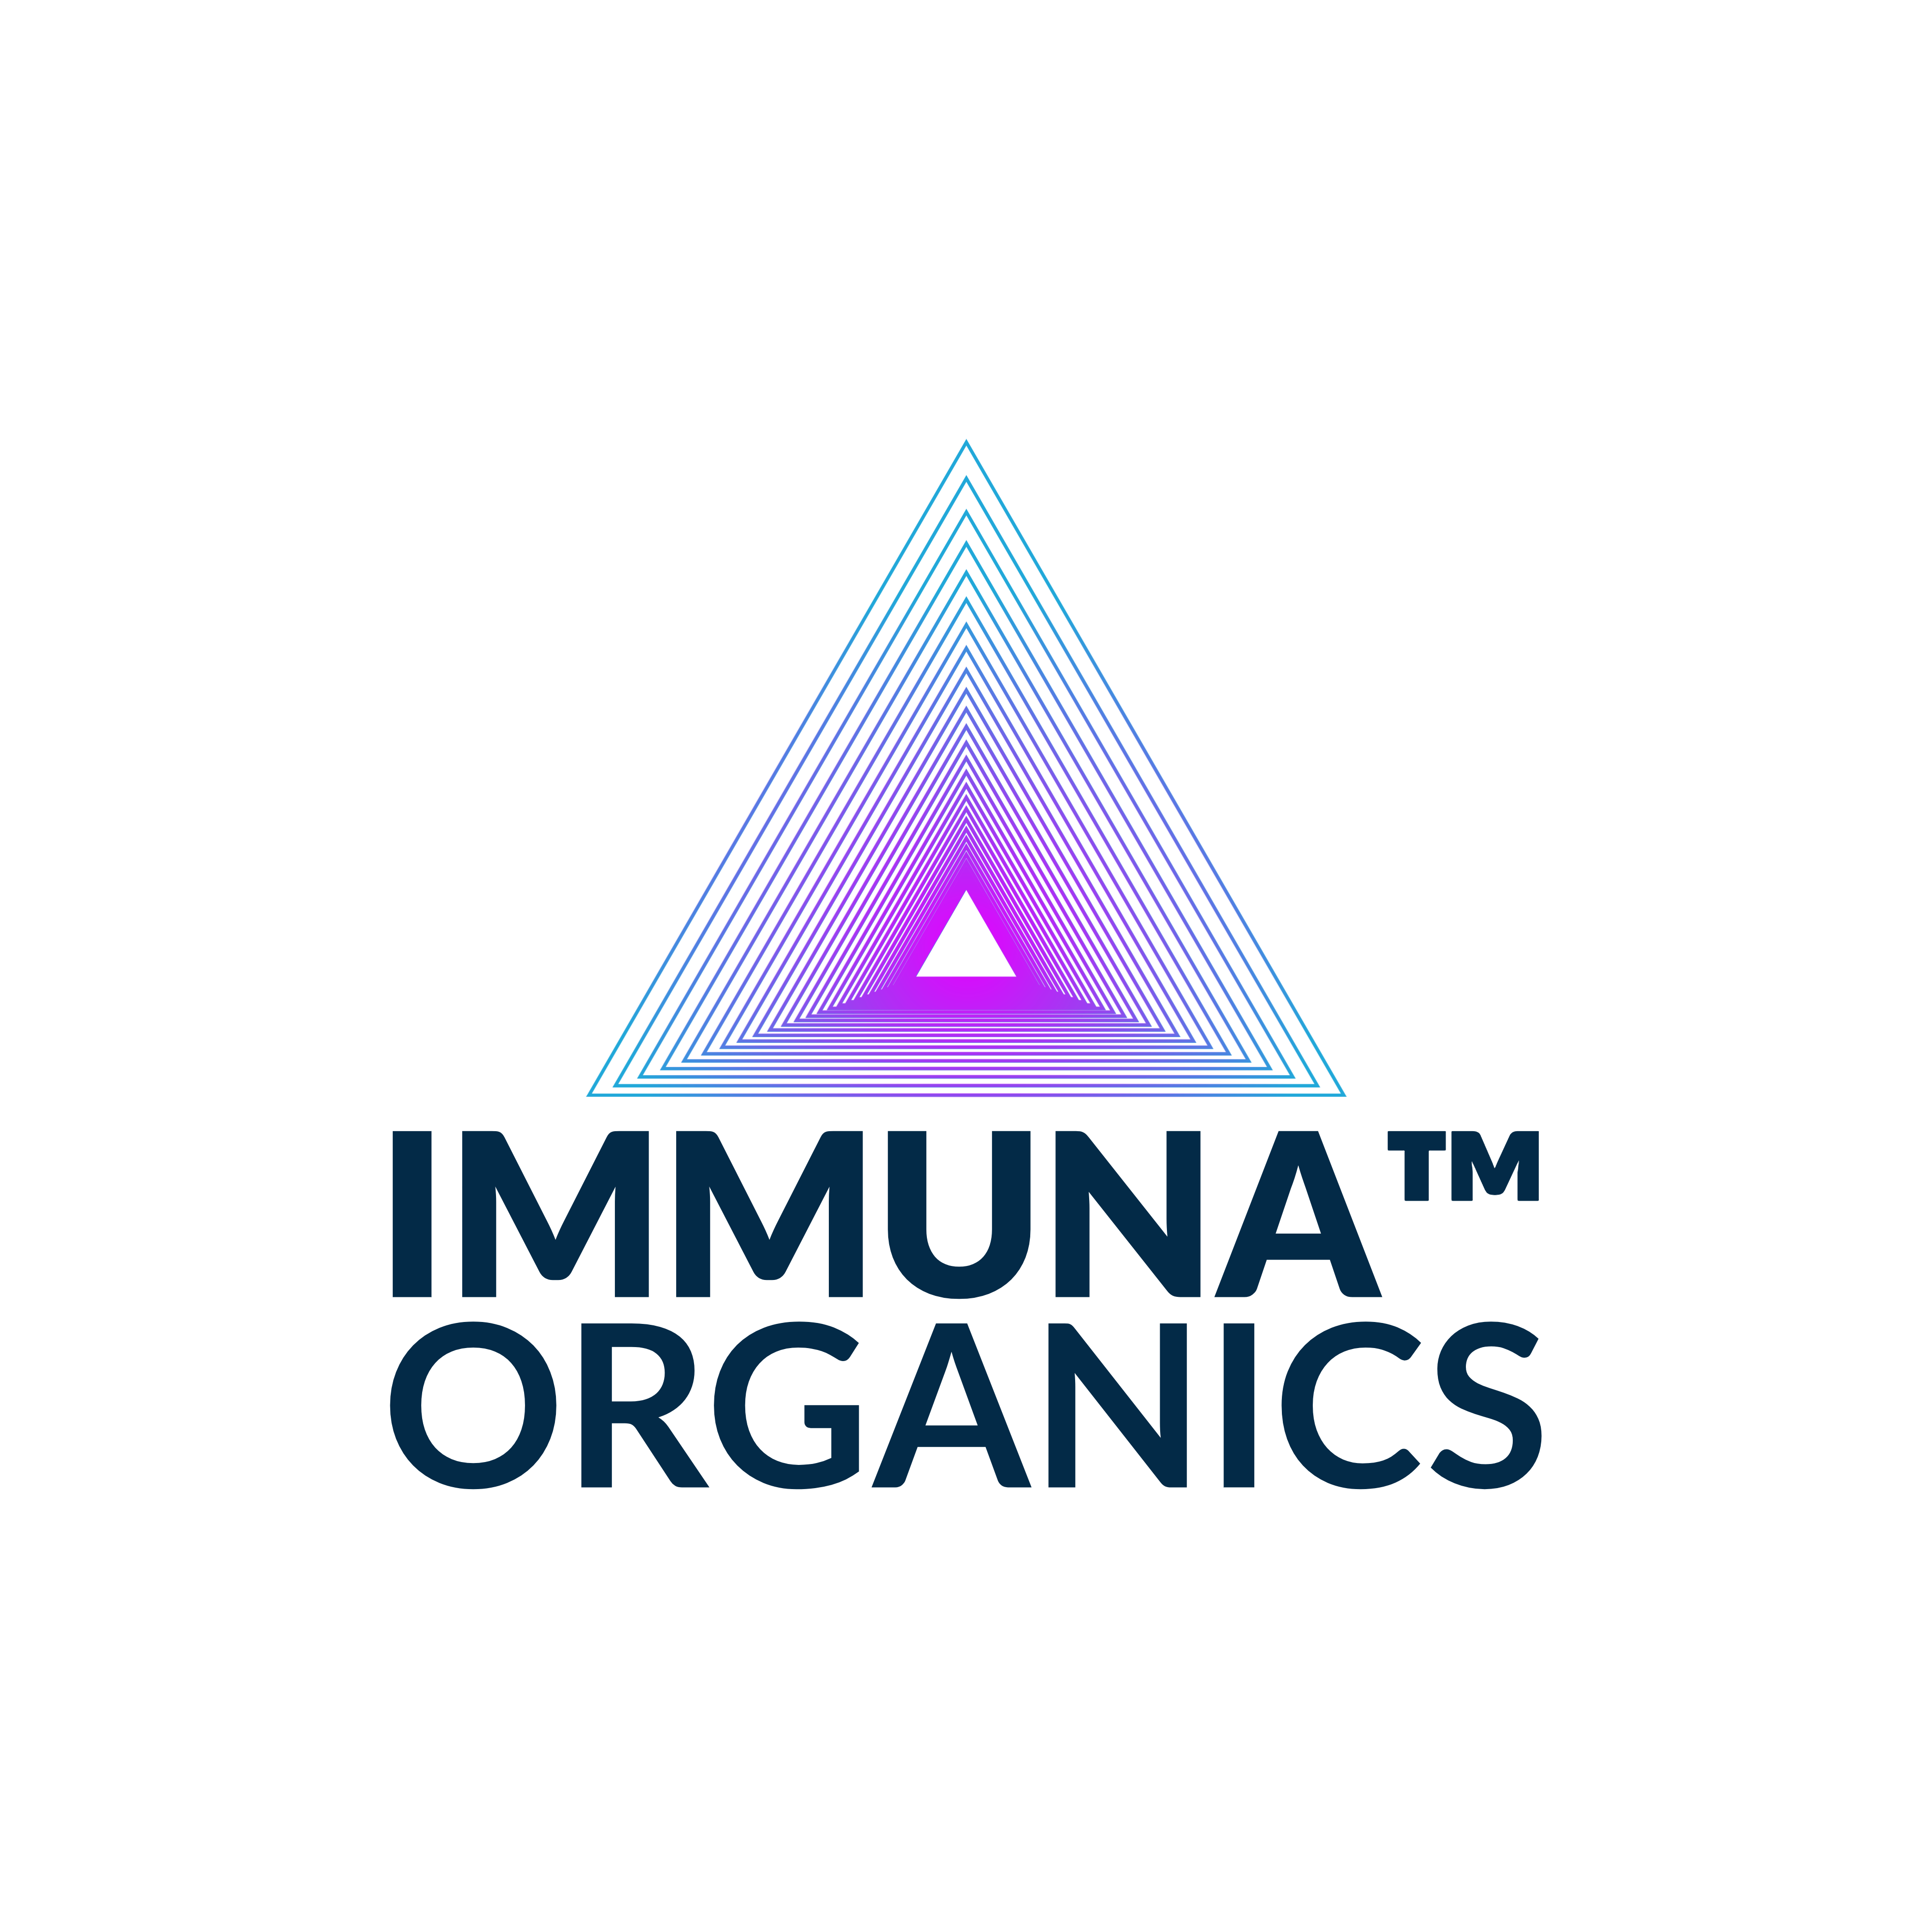 Immuna Organics